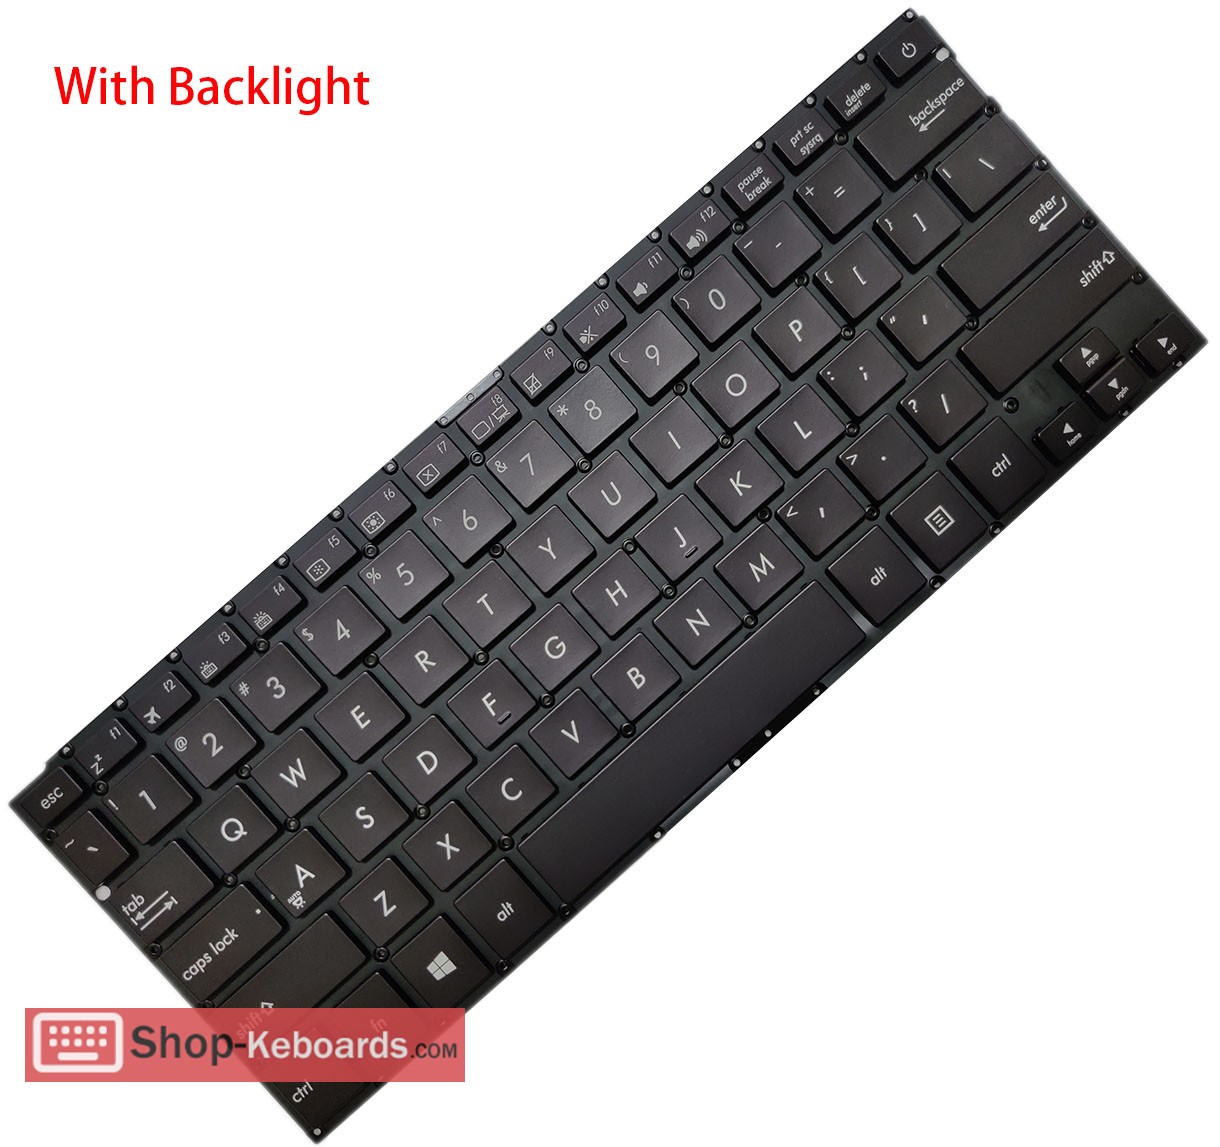 Asus ZENBOOK zenbook-ux410ua-gv296r-GV296R  Keyboard replacement